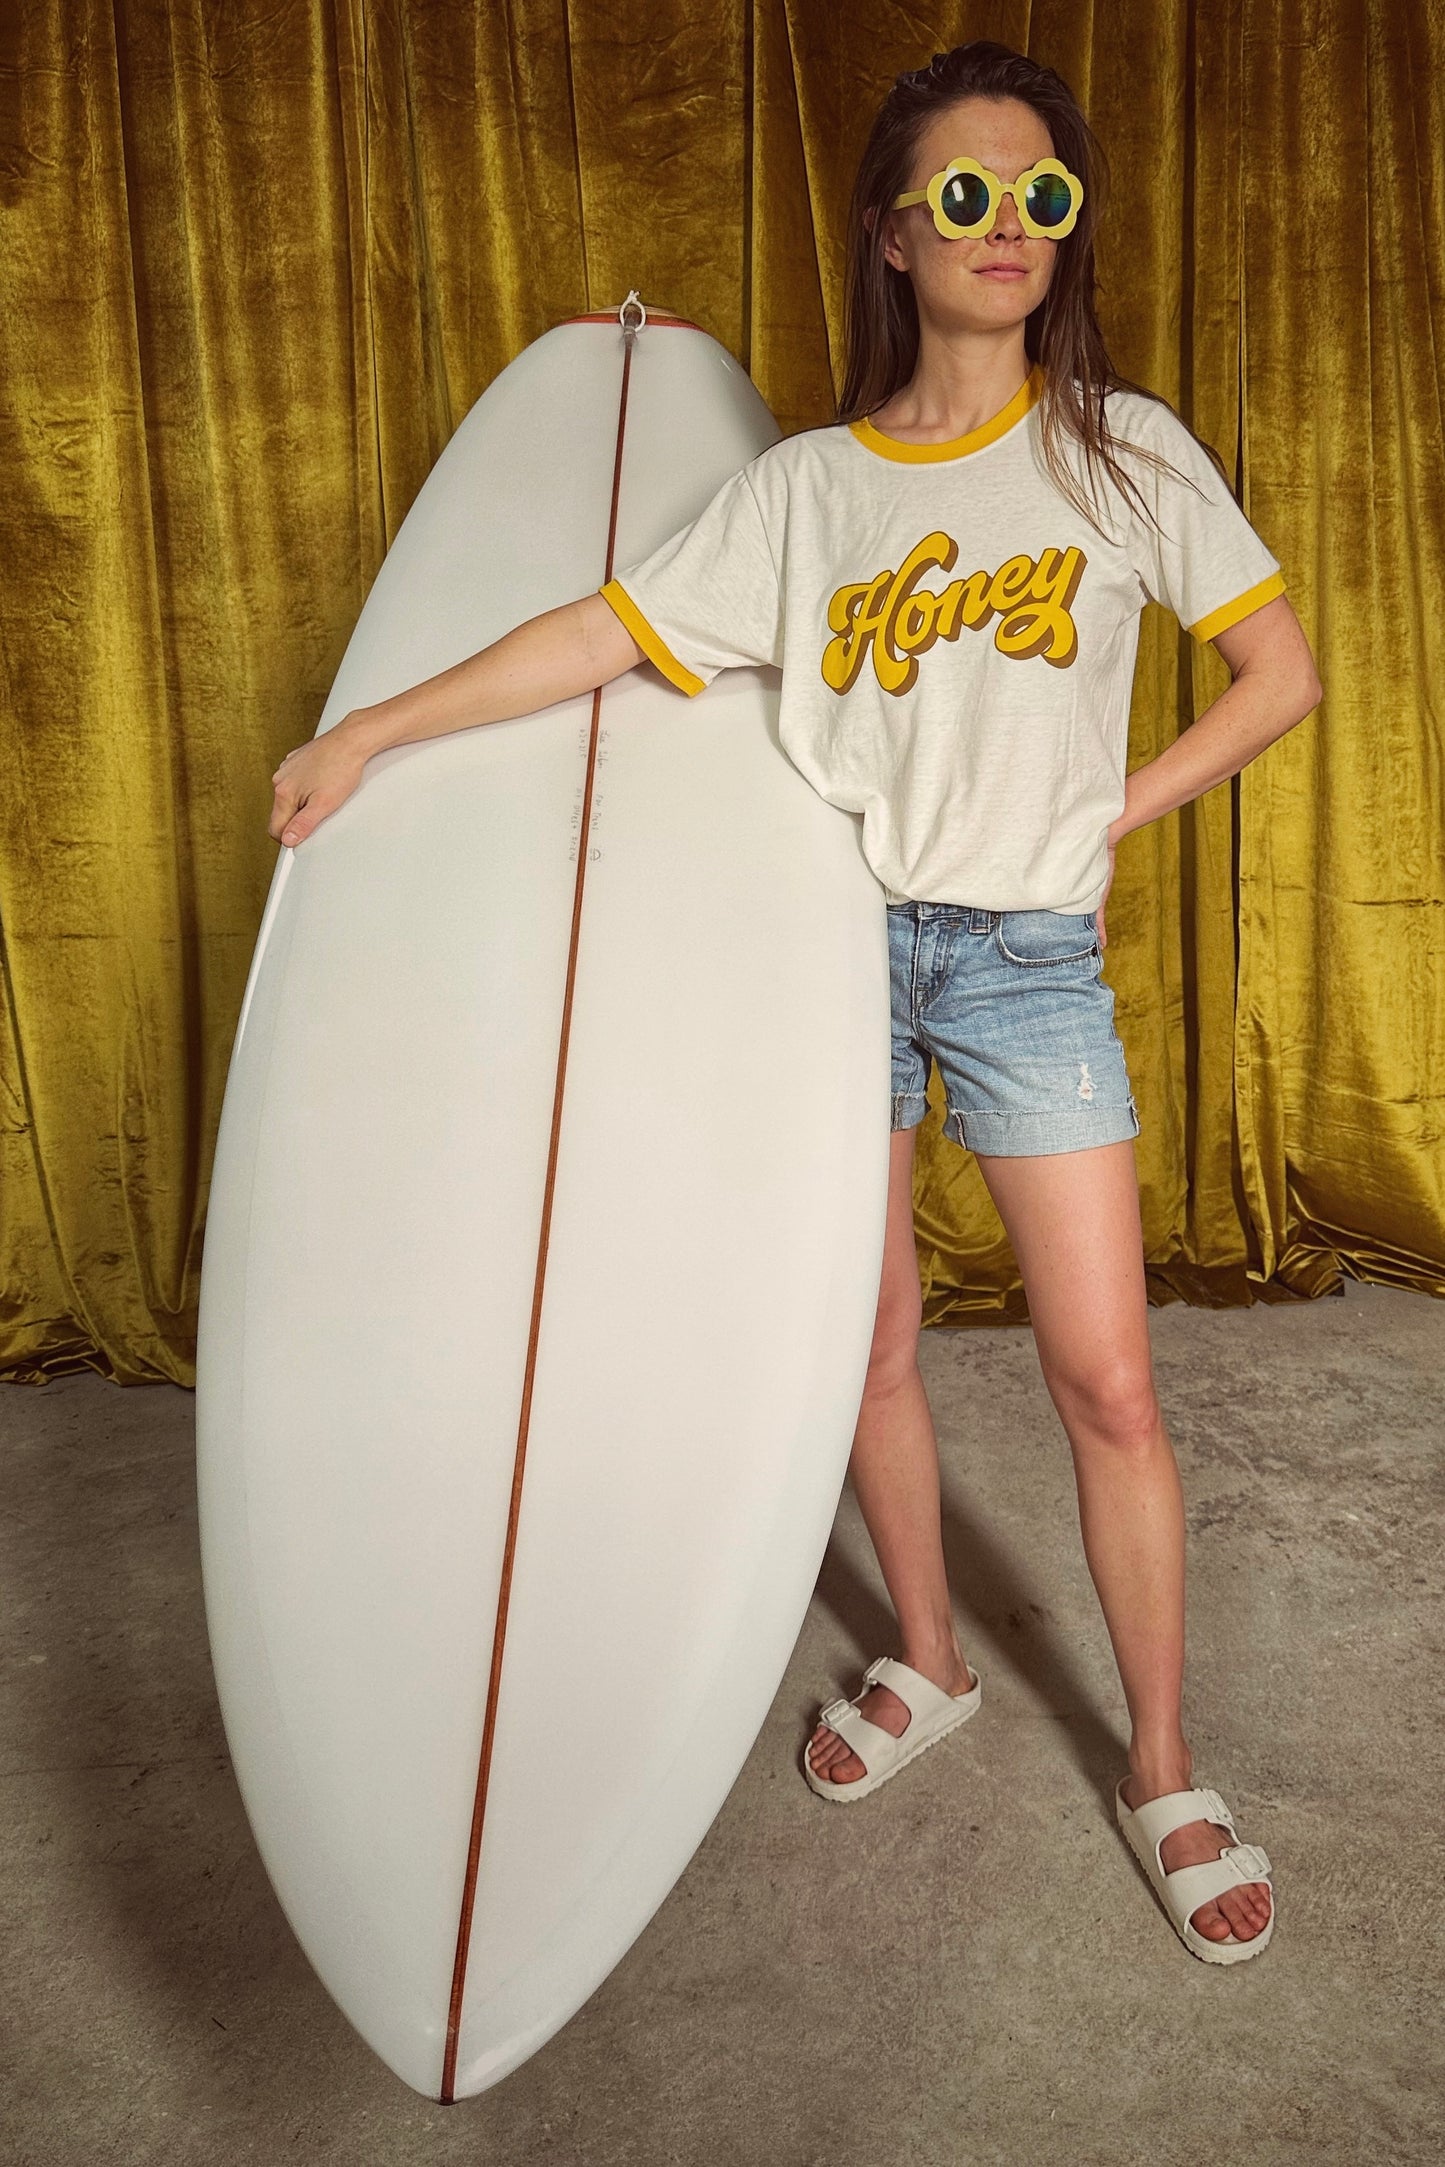 surfer-girl-wearing-honey-tee-shirt